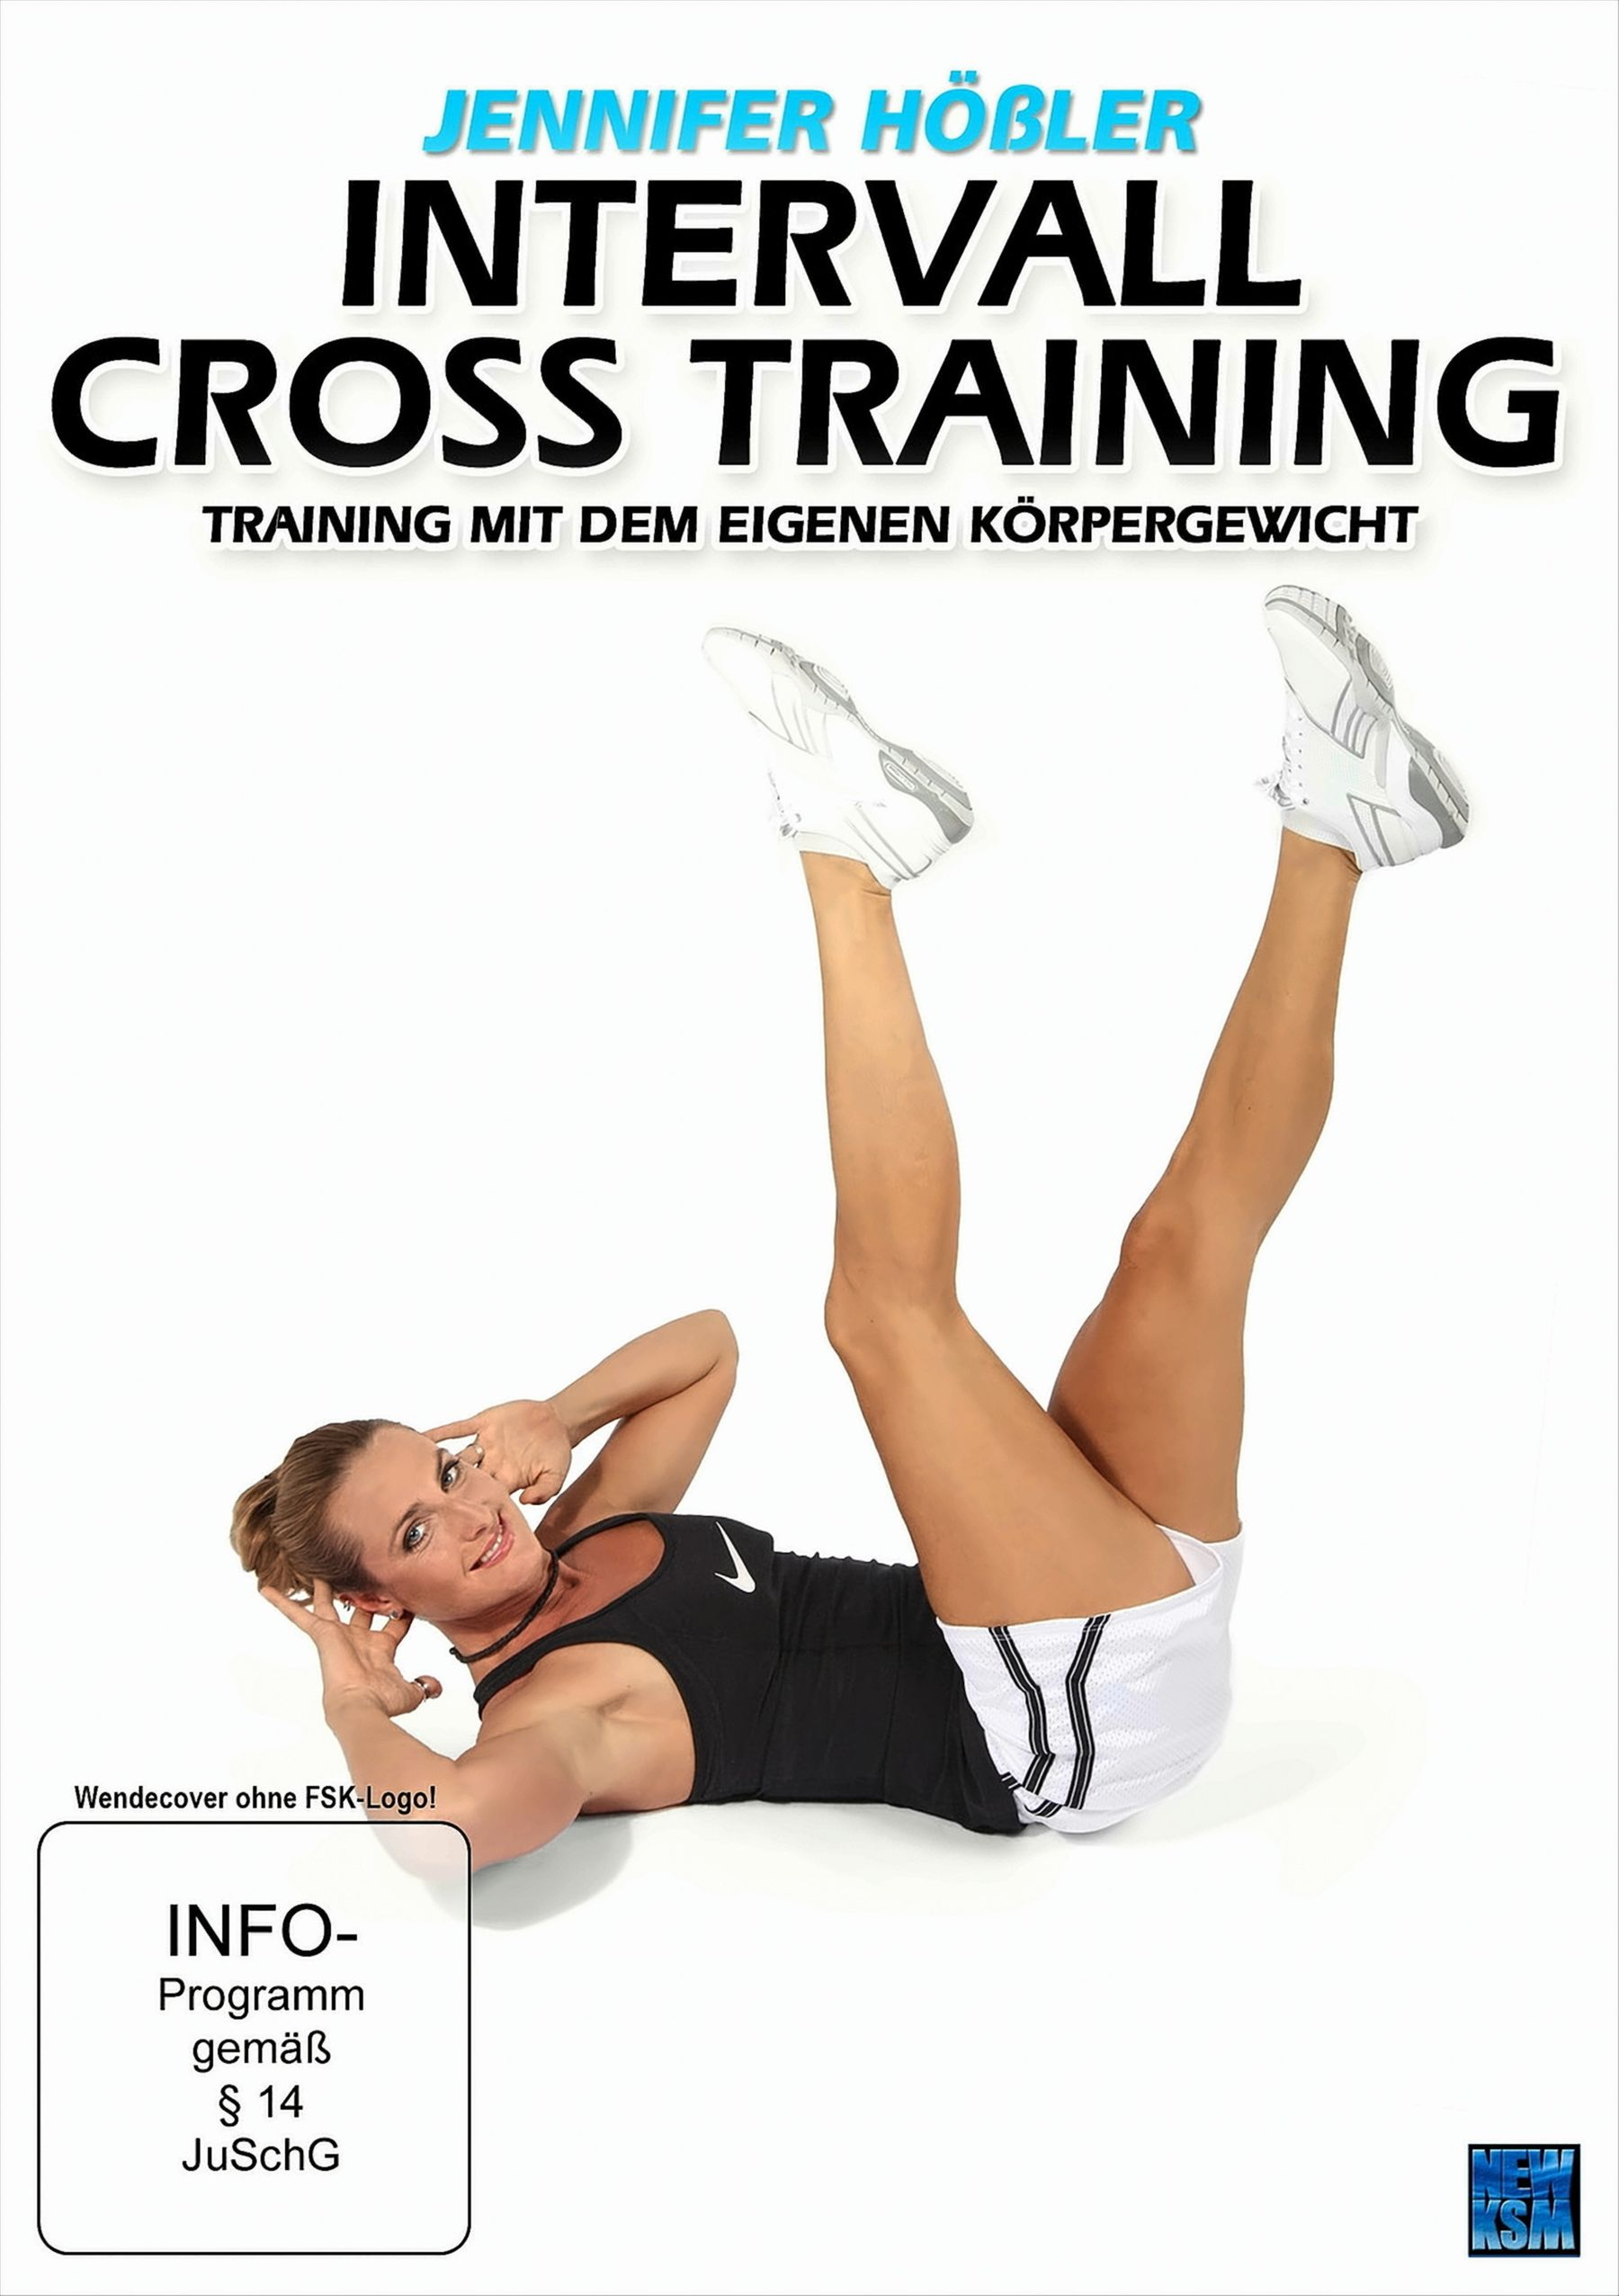 Intervall Cross mit Training: Hößler Körpergewicht DVD Jennifer - Training eigenen dem